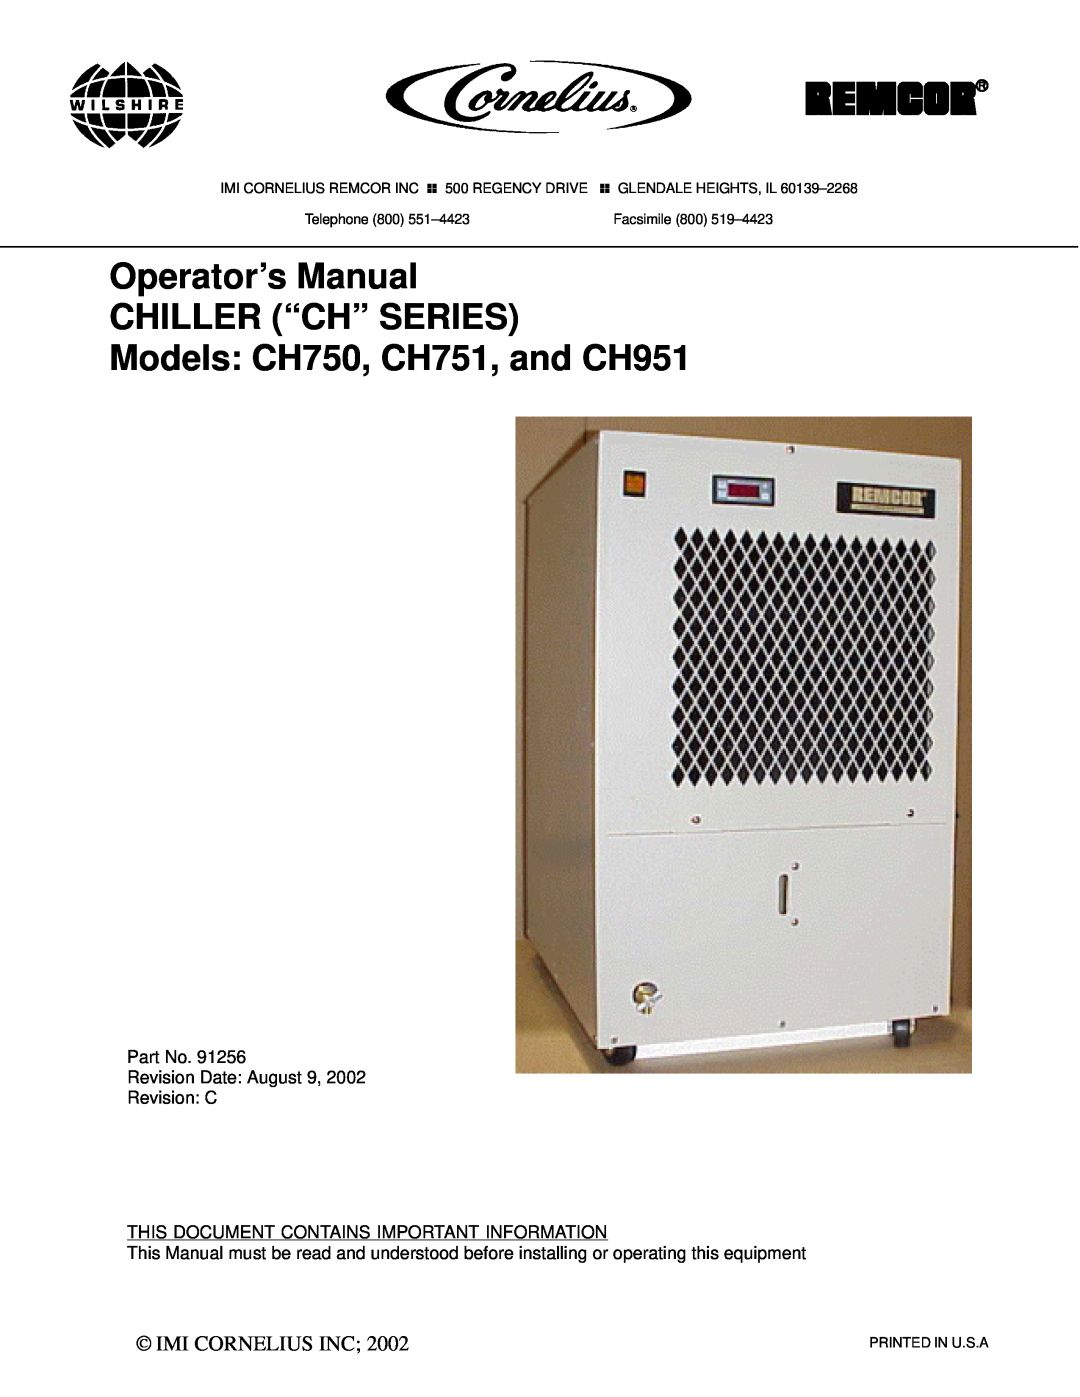 Cornelius manual Operator’s Manual CHILLER “CH” SERIES, Models CH750, CH751, and CH951, Imi Cornelius Inc 